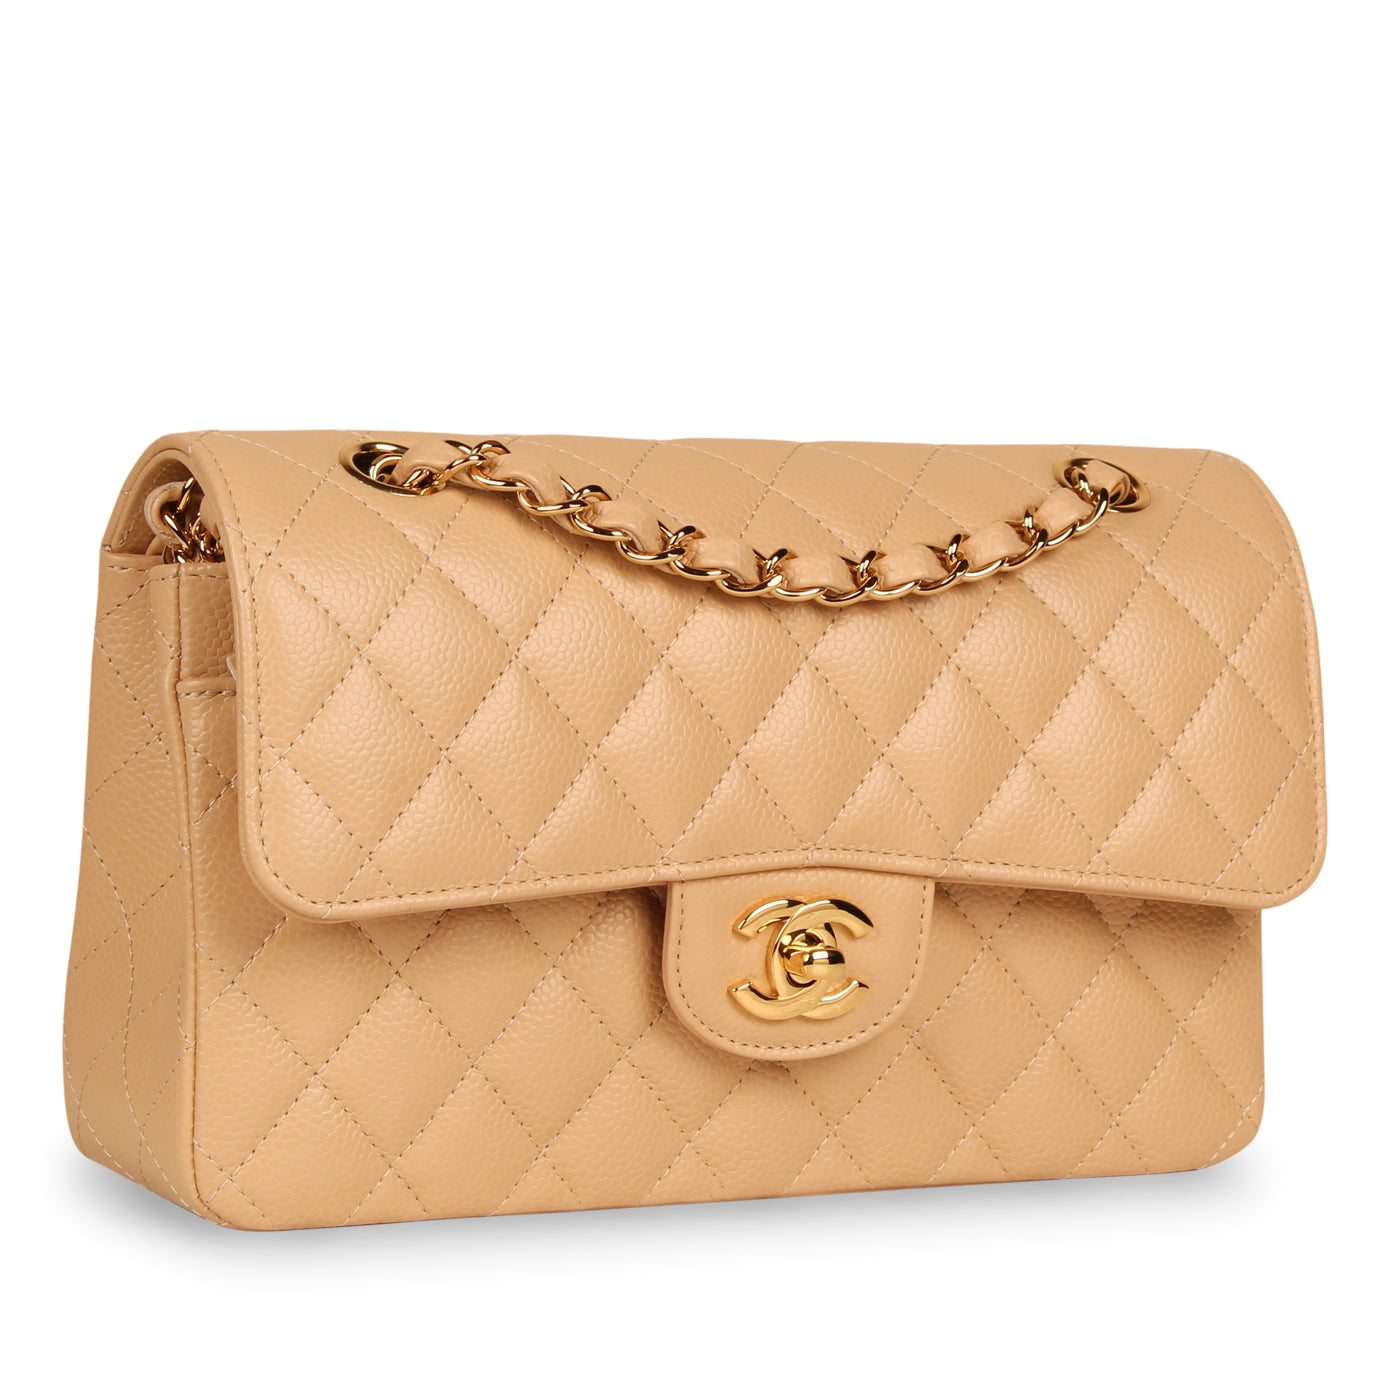 Chanel - Classic Flap Bag - Small - BEIGE Caviar - GHW - Unused